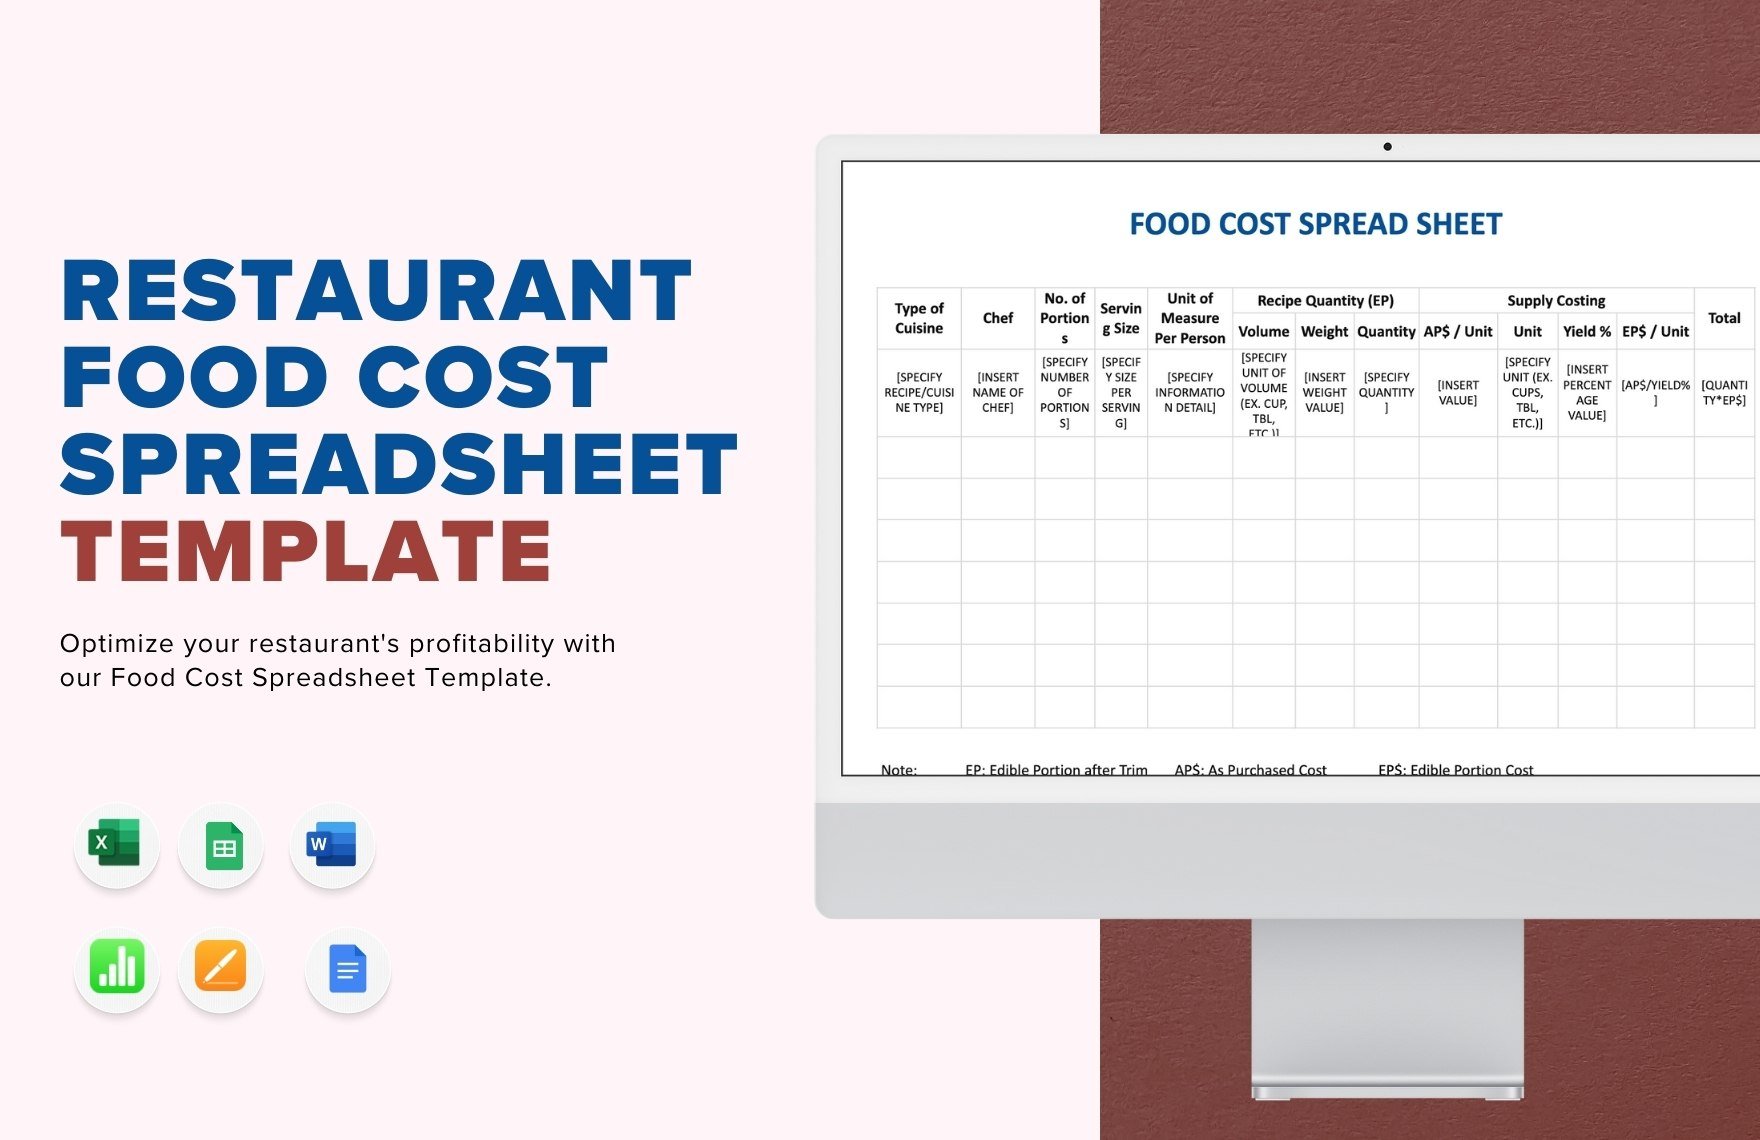 Restaurant Food Cost Spreadsheet Template